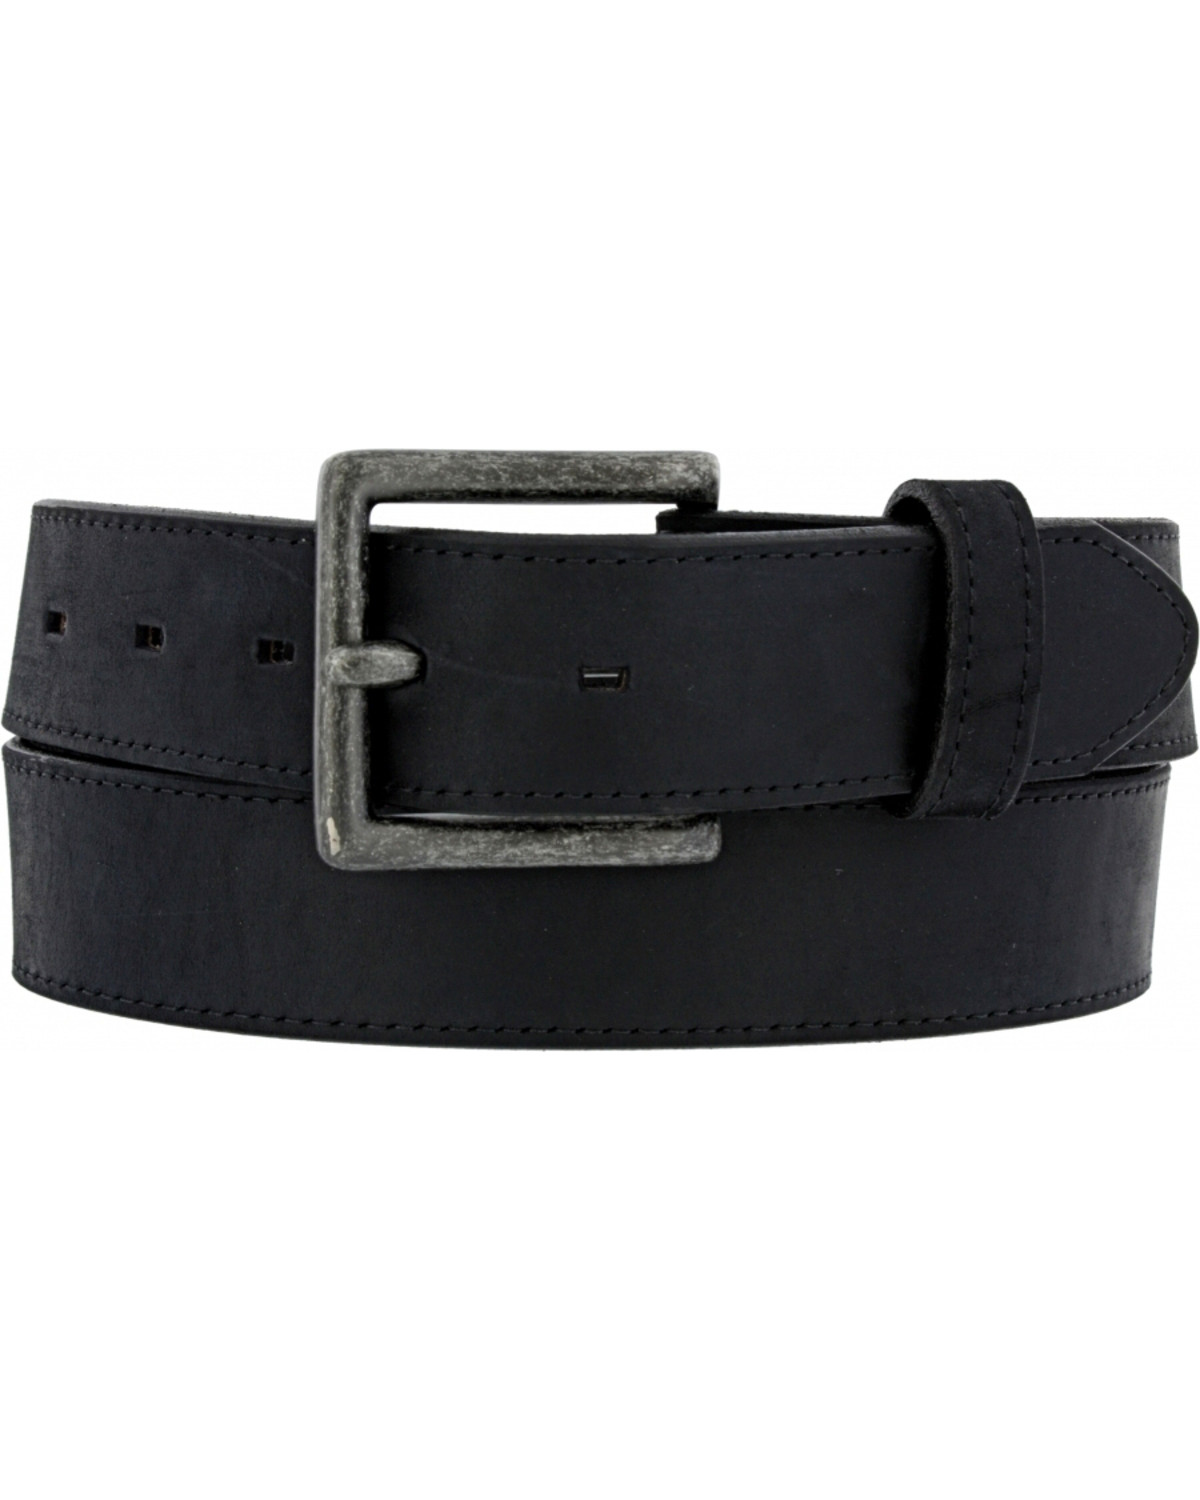 Chippewa Men's Black Sycamore Leather Belt